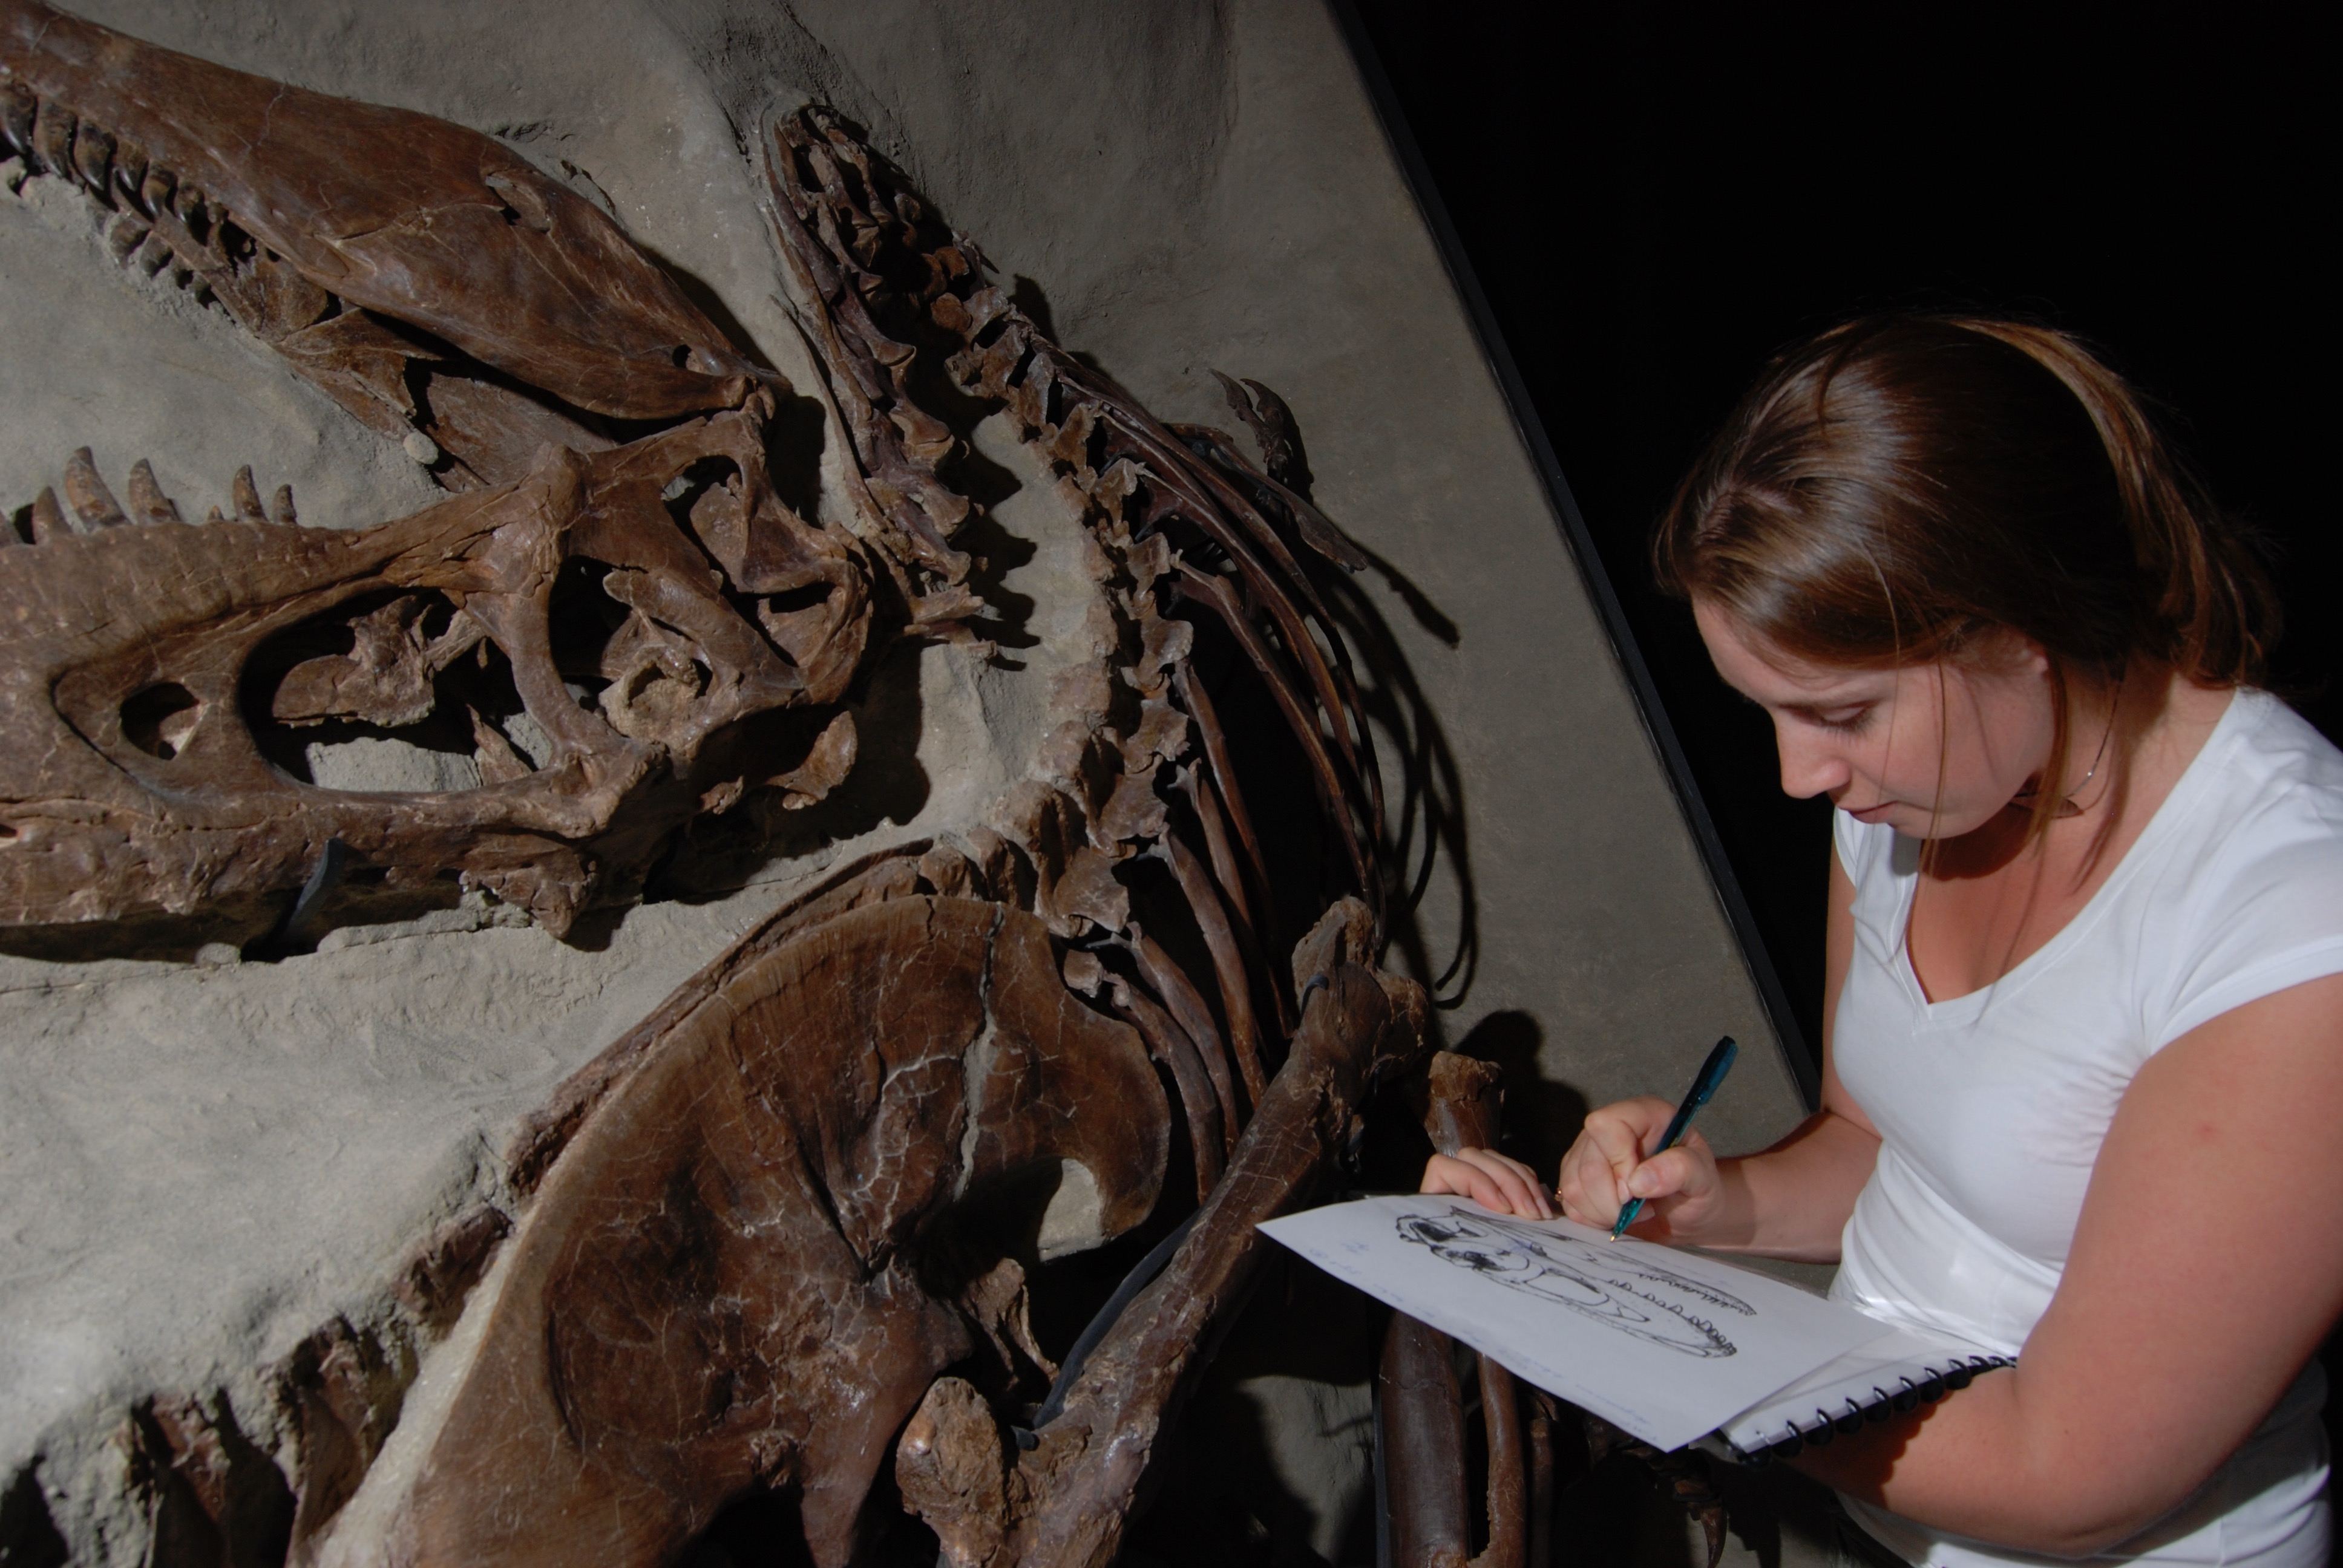 Author Lara Surring examines a tyrannosaur fossil